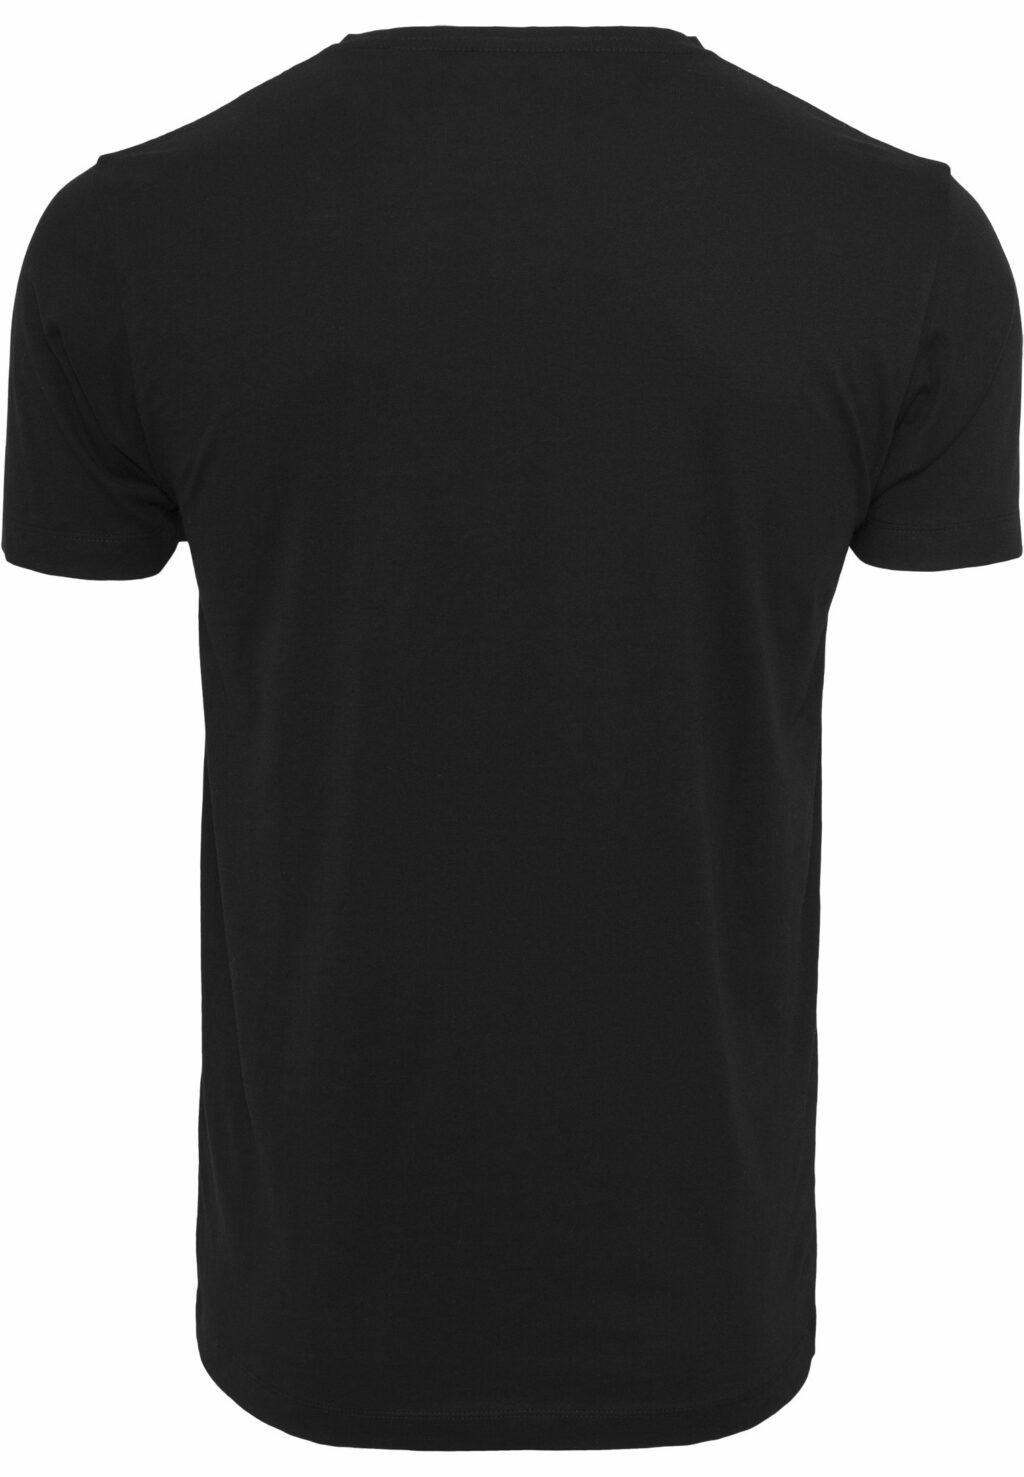 99 Problems T-Shirt black MT132